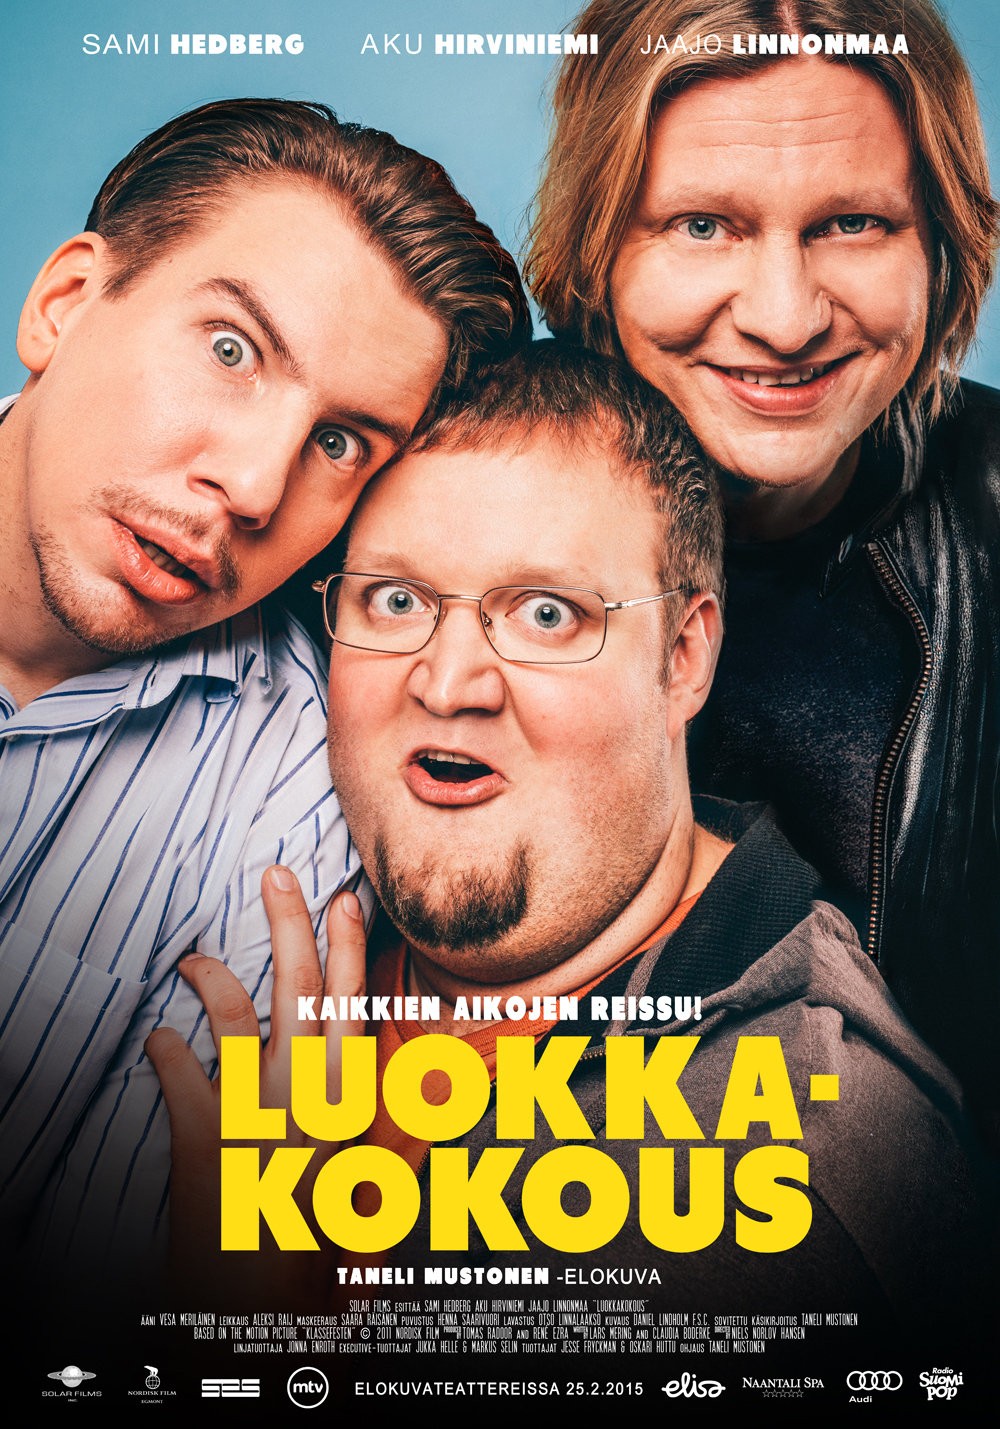 Extra Large Movie Poster Image for Luokkakokous 